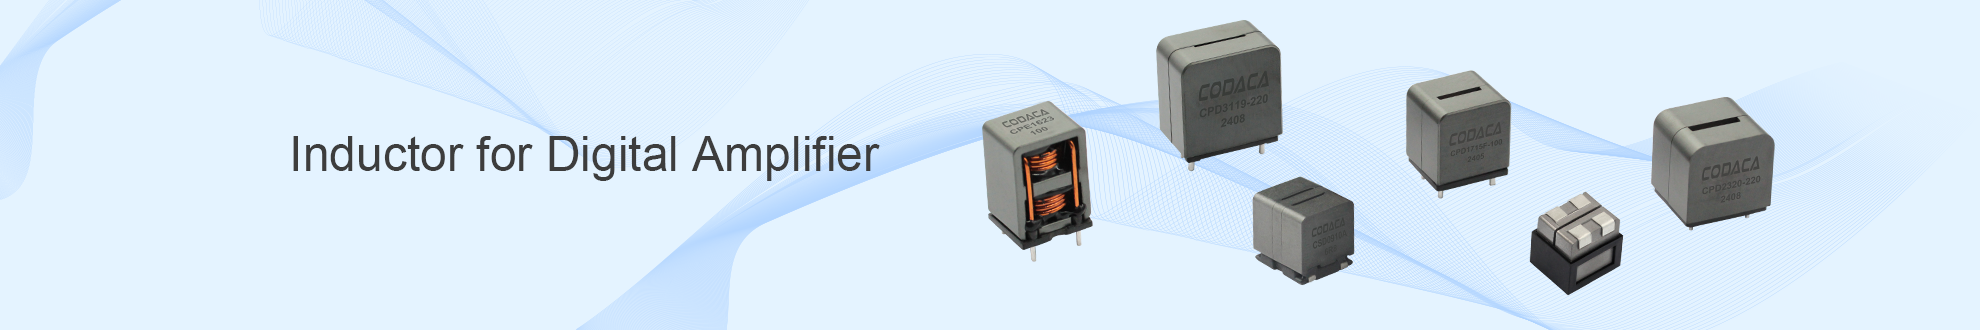 Inductor for Digital Amplifier